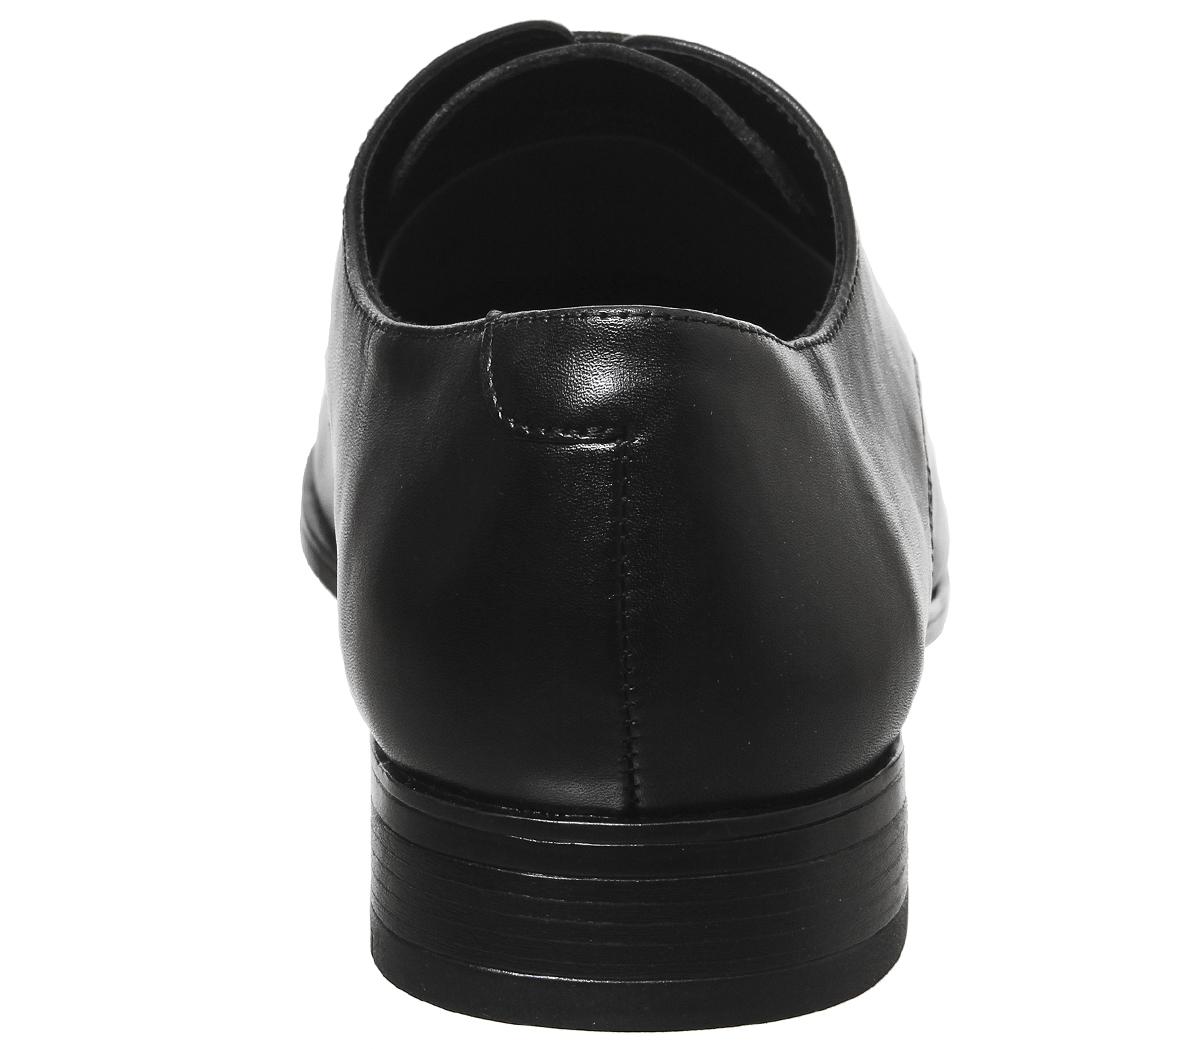 OFFICE Micro Derby Smart Shoes Black Leather - Men’s Smart Shoes